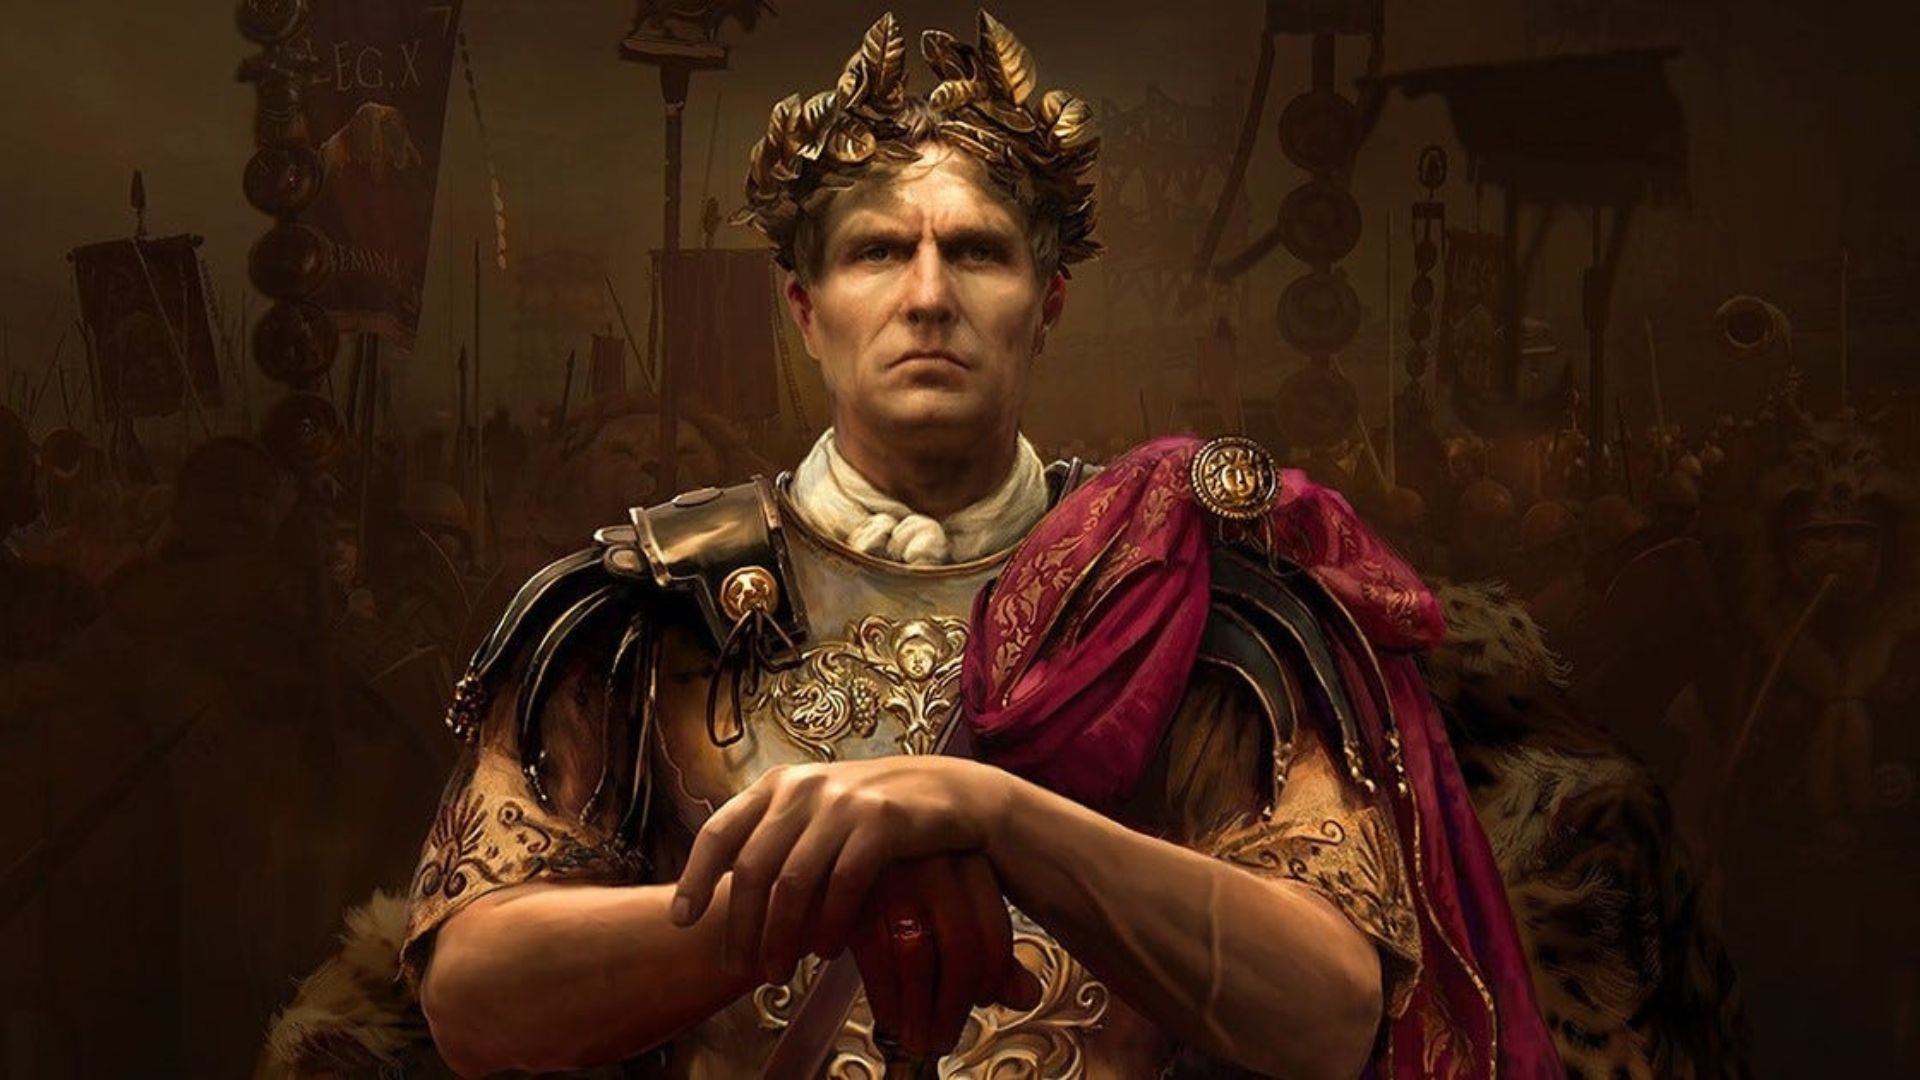 Julius Caesar Wearing An Armor and A Crown